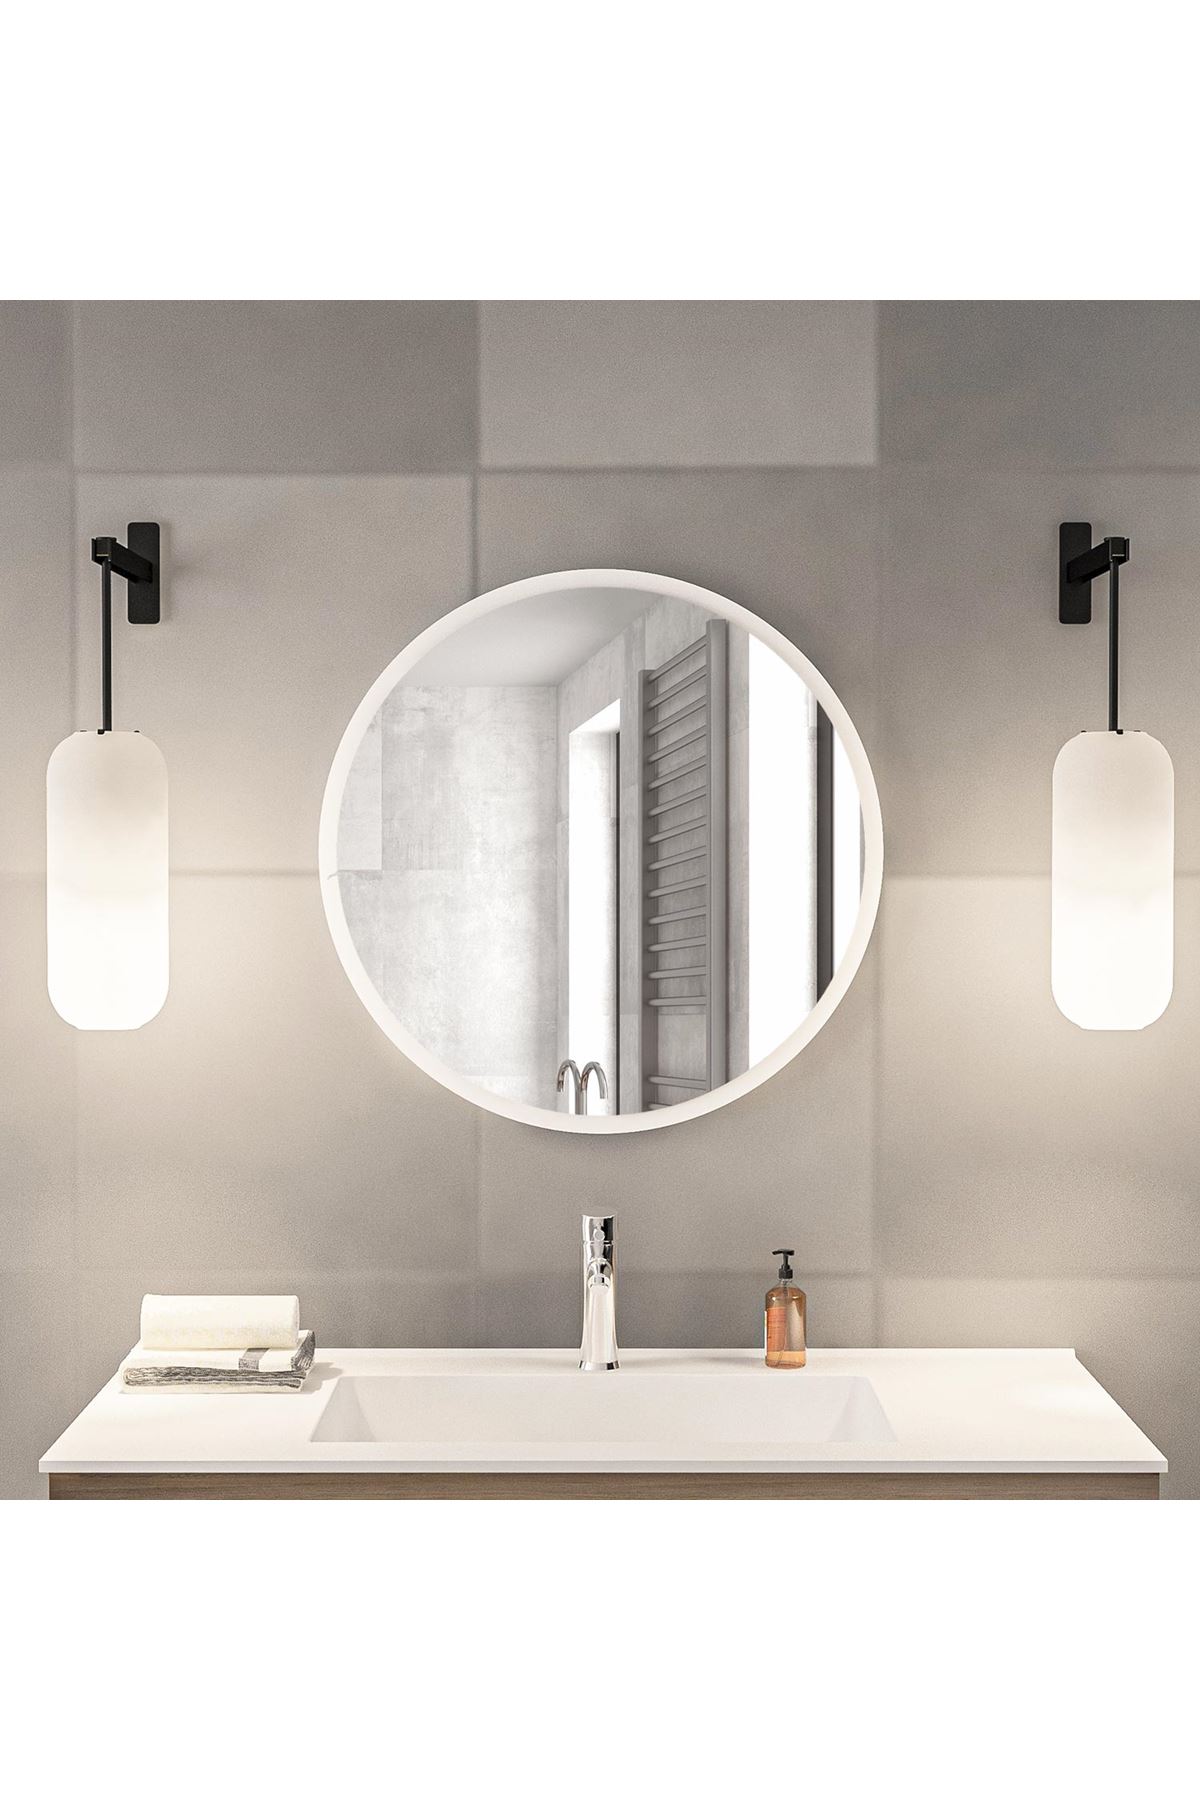 Bofigo 60 Cm Porto Banyo Aynası Dekoratif Lavabo Aynası Yuvarlak Ayna Beyaz